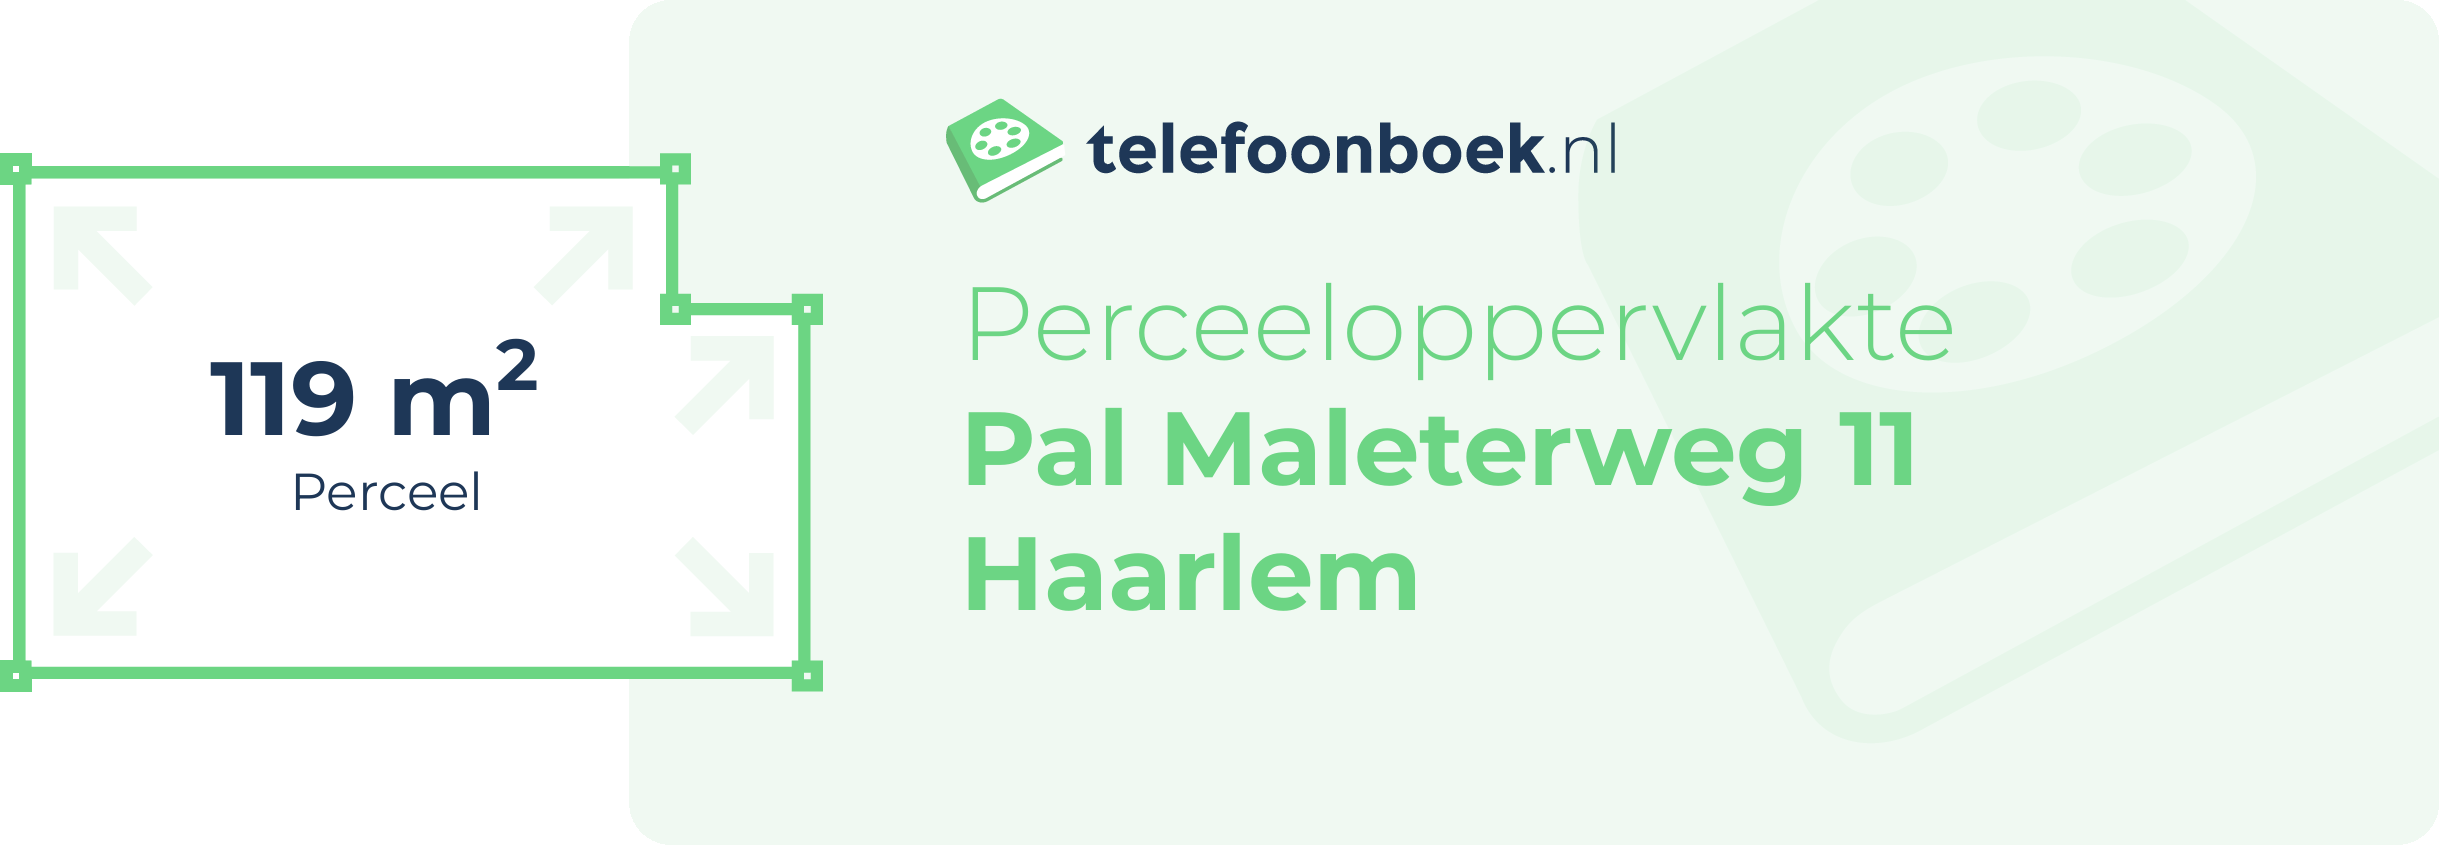 Perceeloppervlakte Pal Maleterweg 11 Haarlem